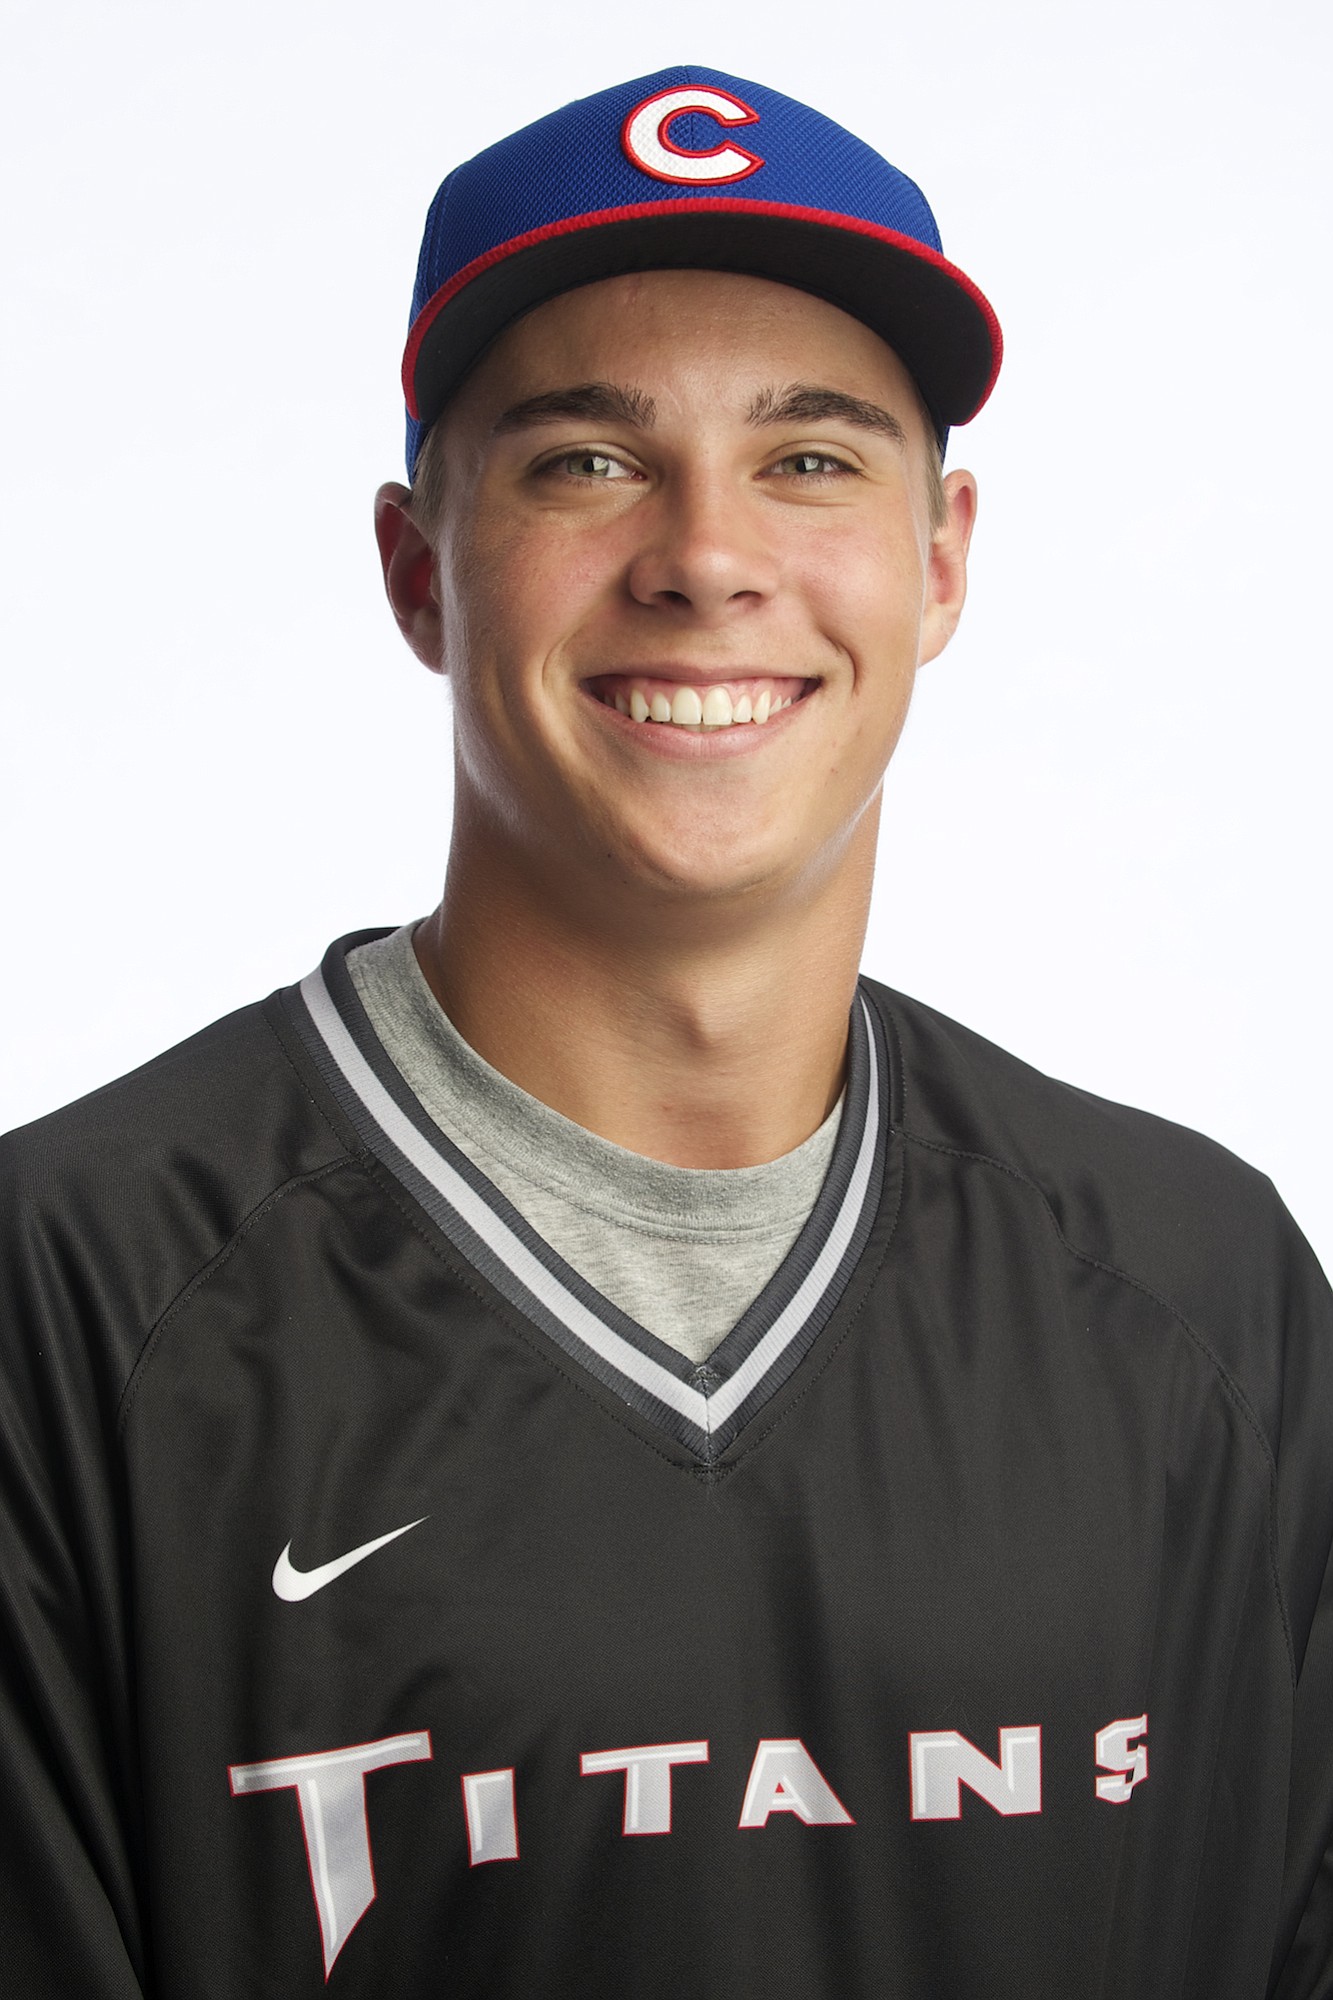 Cody Hawken, shown, Thursday, June 11, 2015, is All-Region baseball player of the year.(Steven Lane/The Columbian)